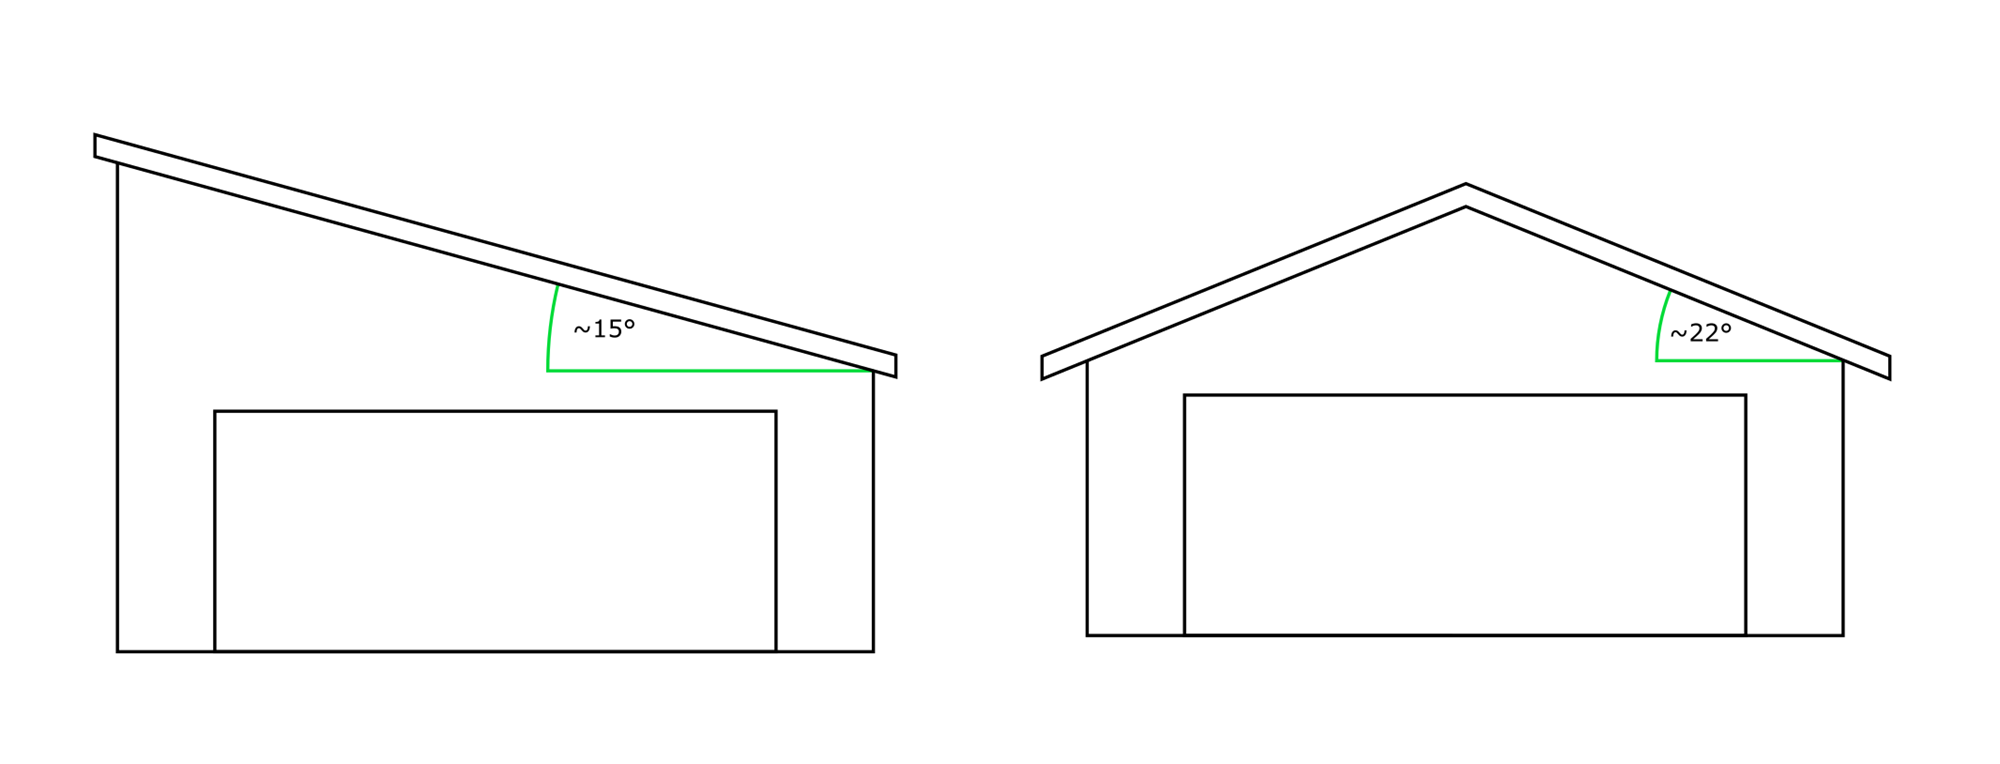 Prisforskjell garasje sadeltak vs. pulttak - sadeltak vs pulttak.png - FSund